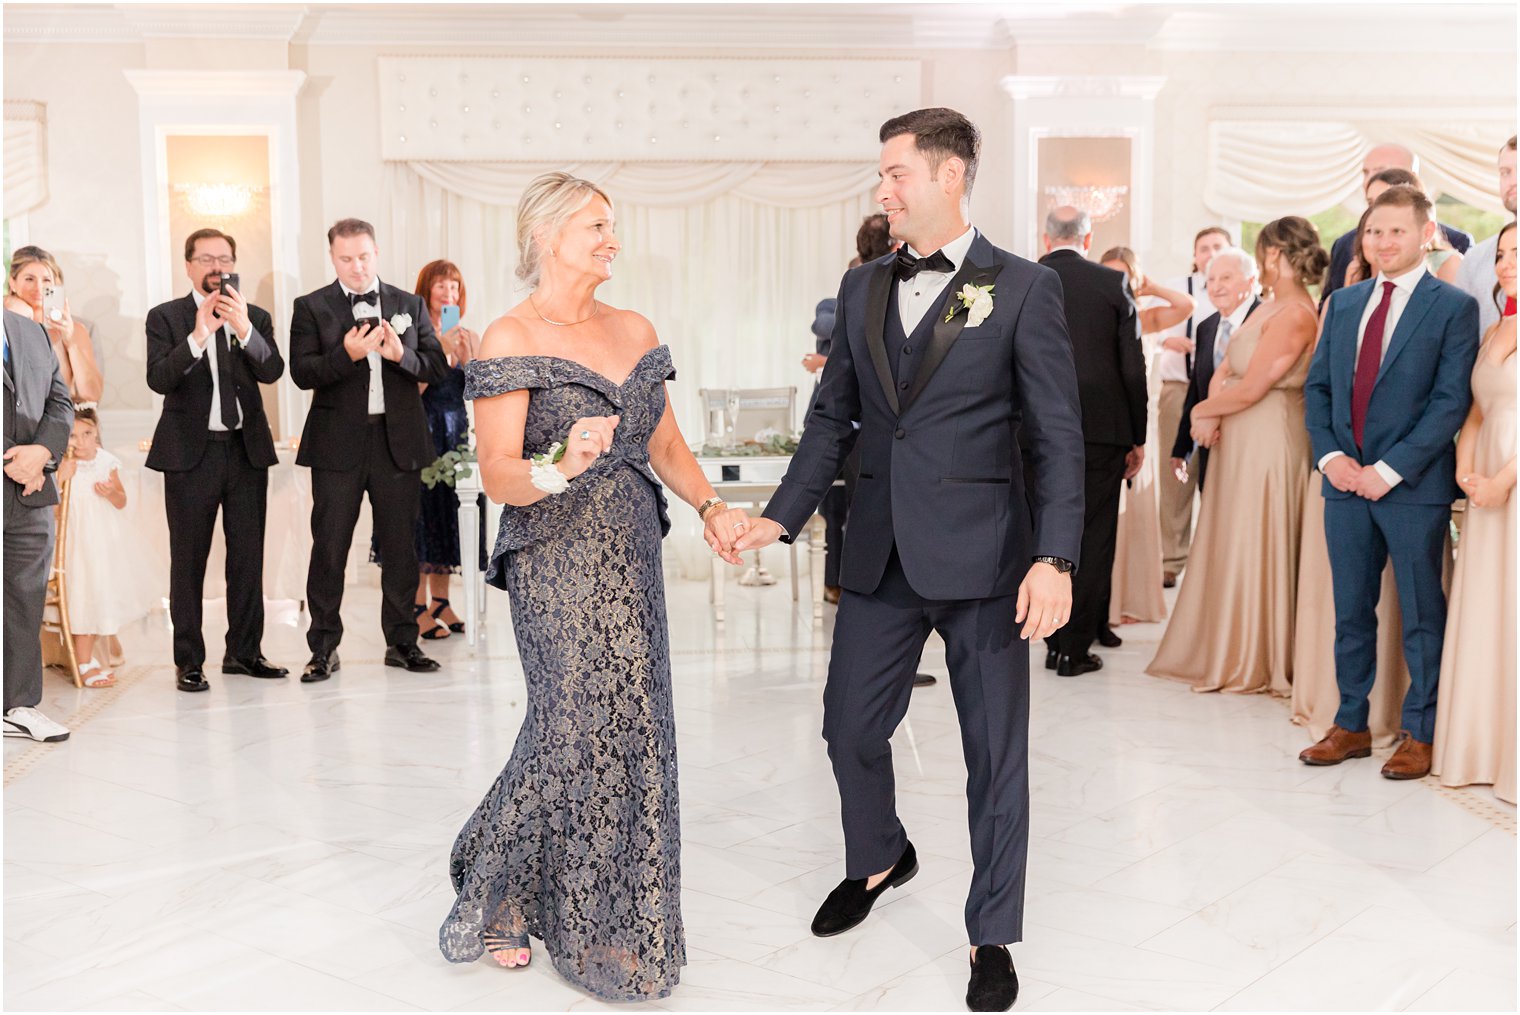 groom leads mom to dance floor in New Jersey ballroom